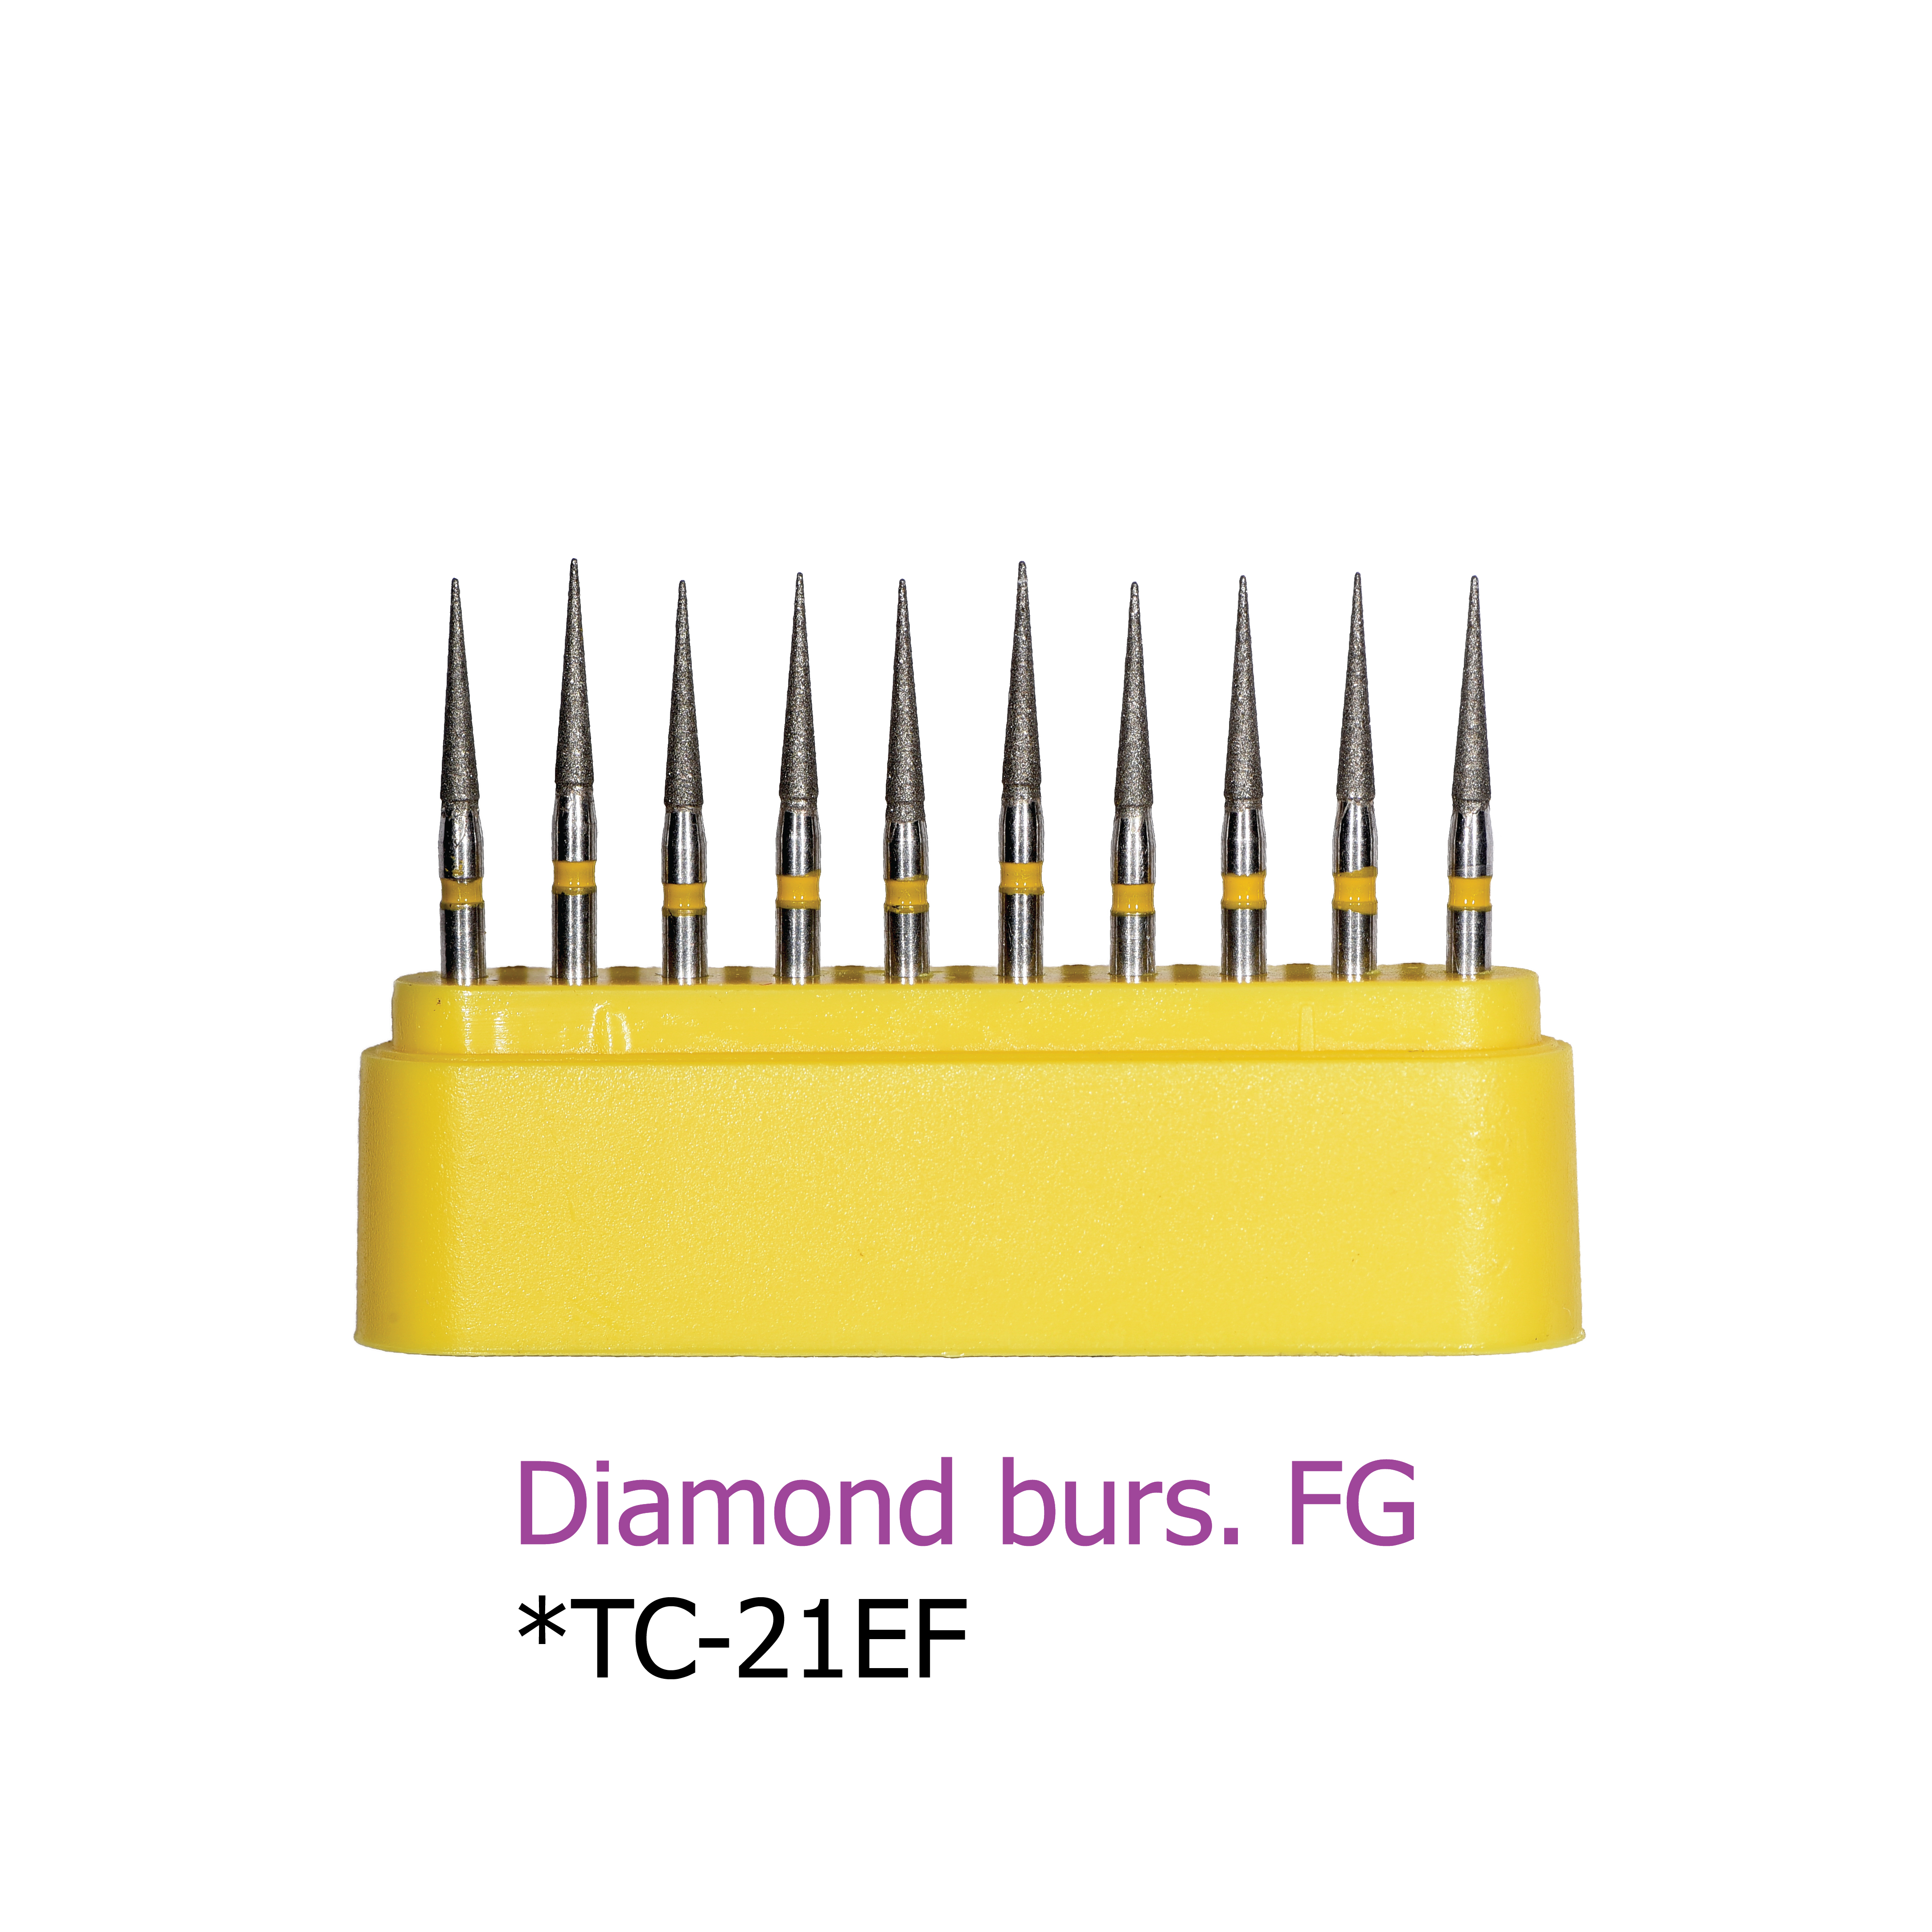 Diamond burs. FG *TC-21EF